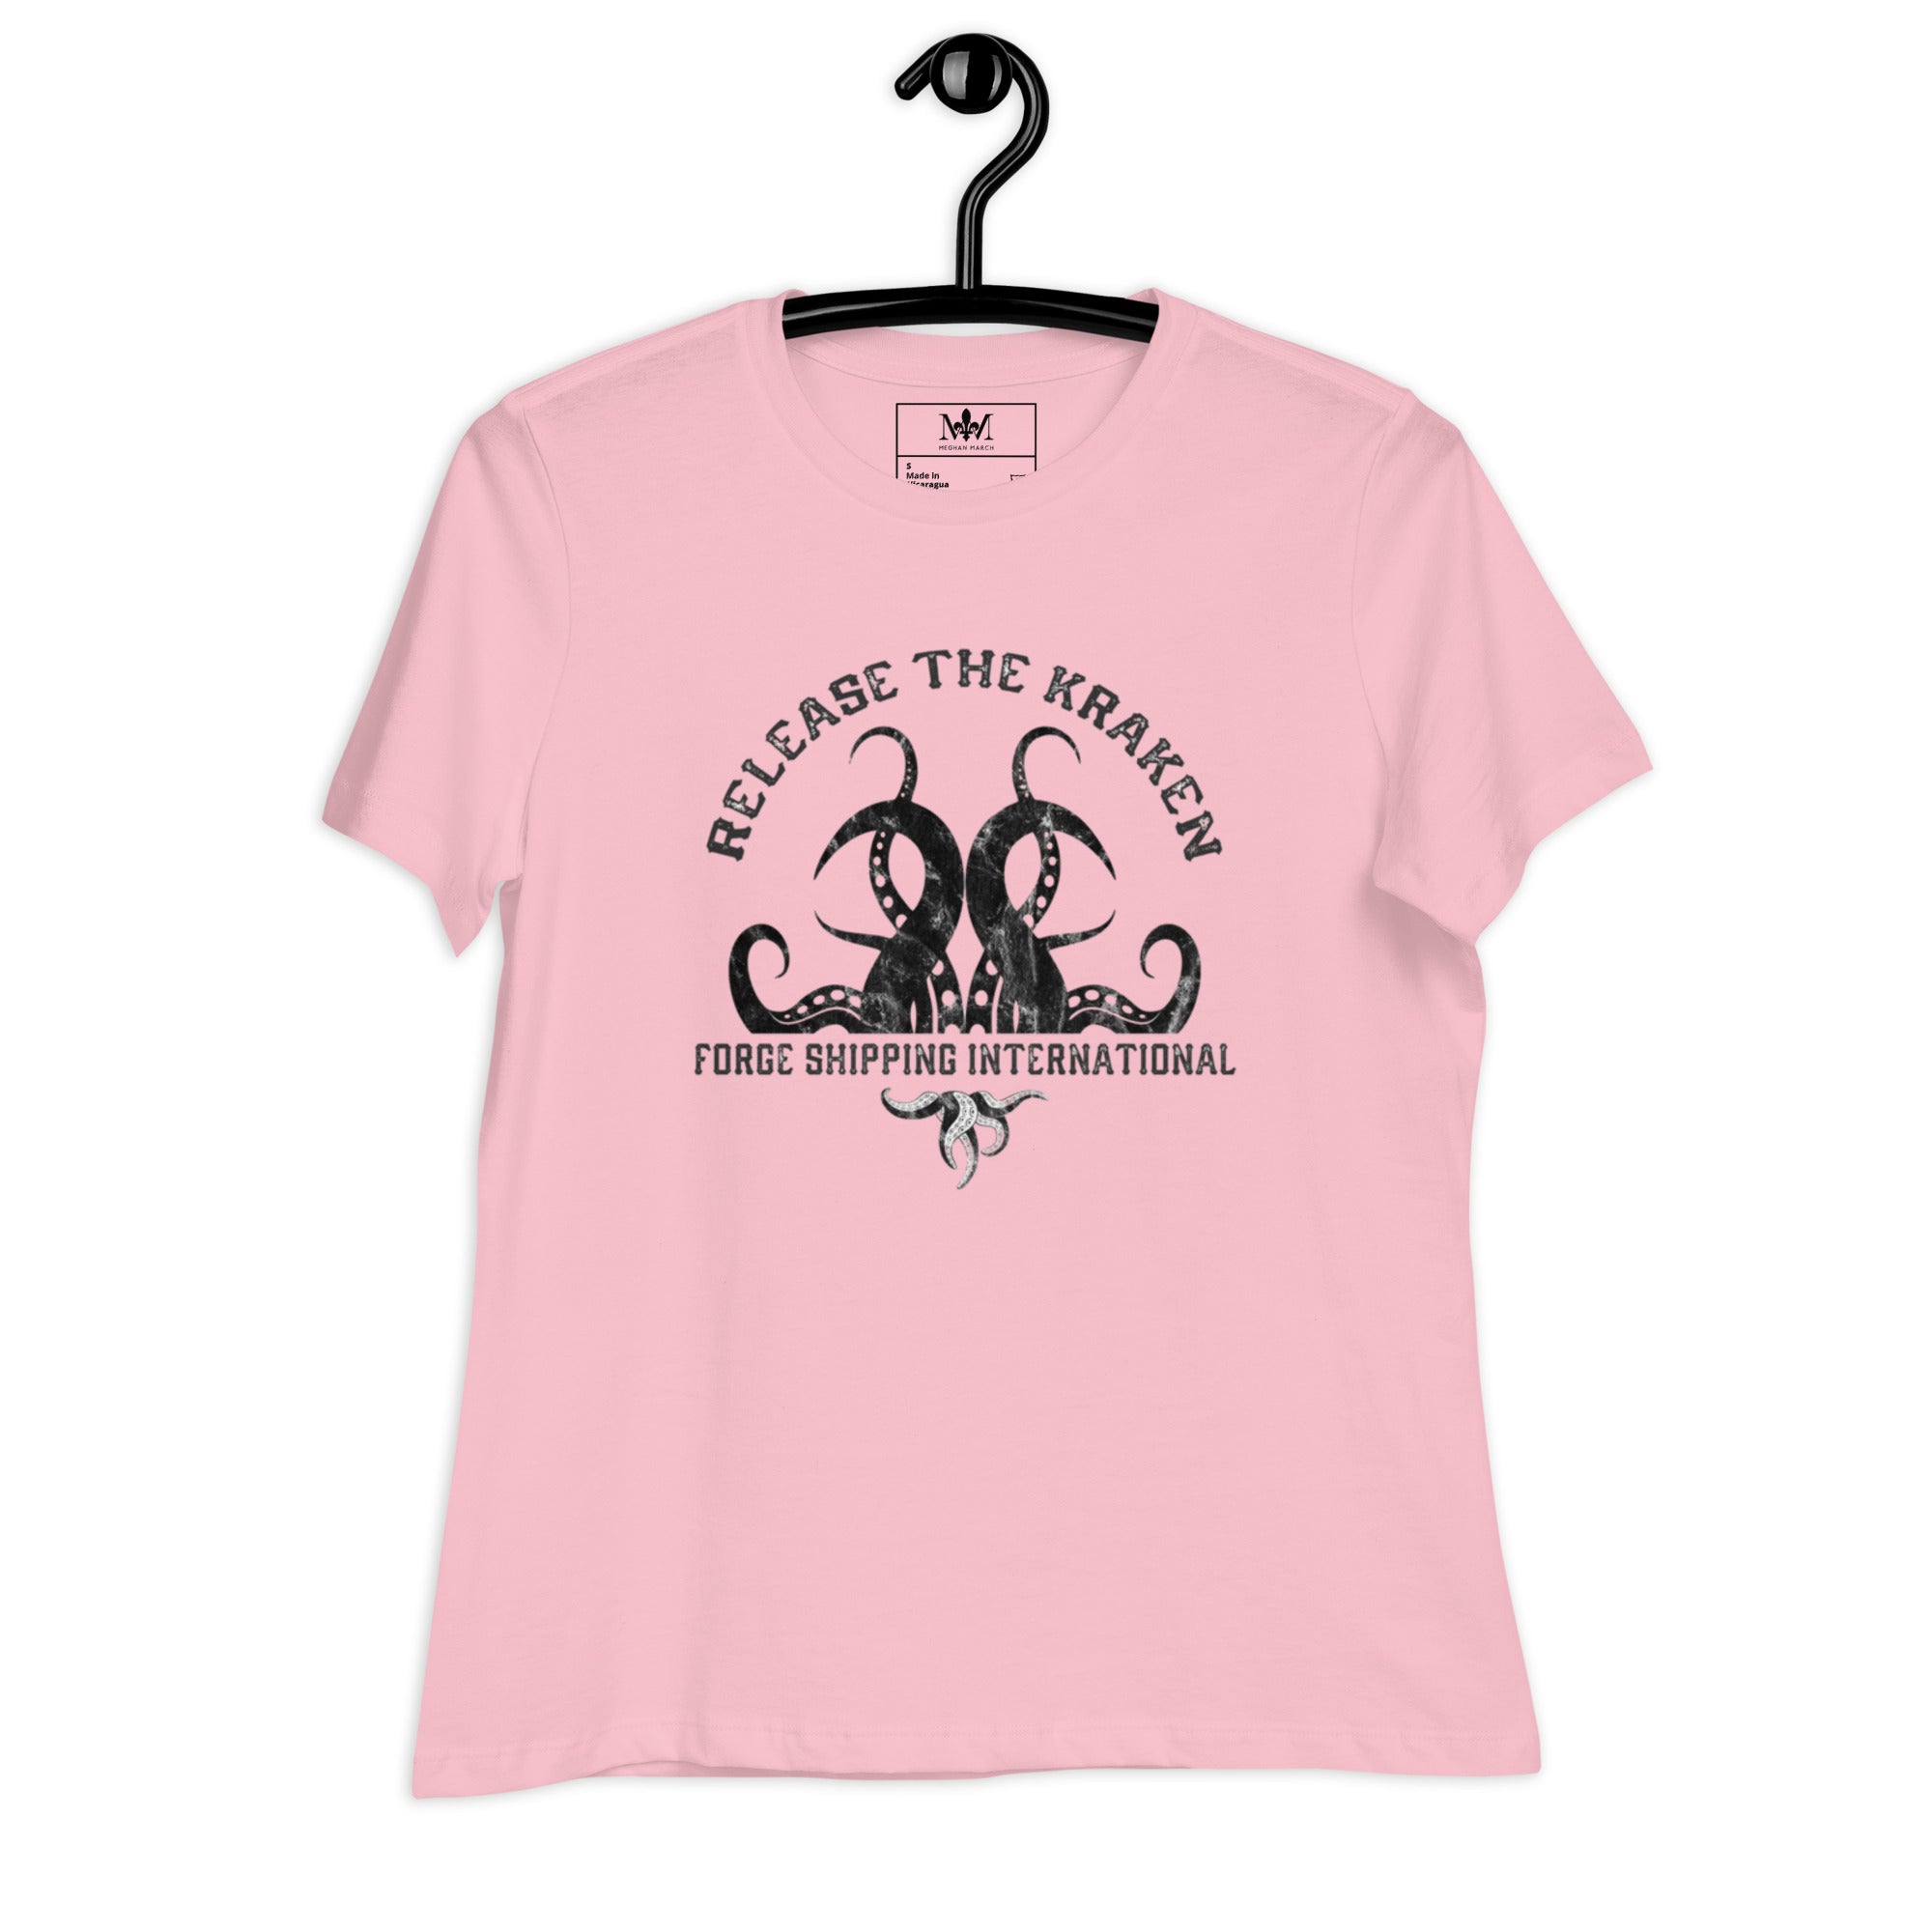 Release the Kraken Women's T-Shirt